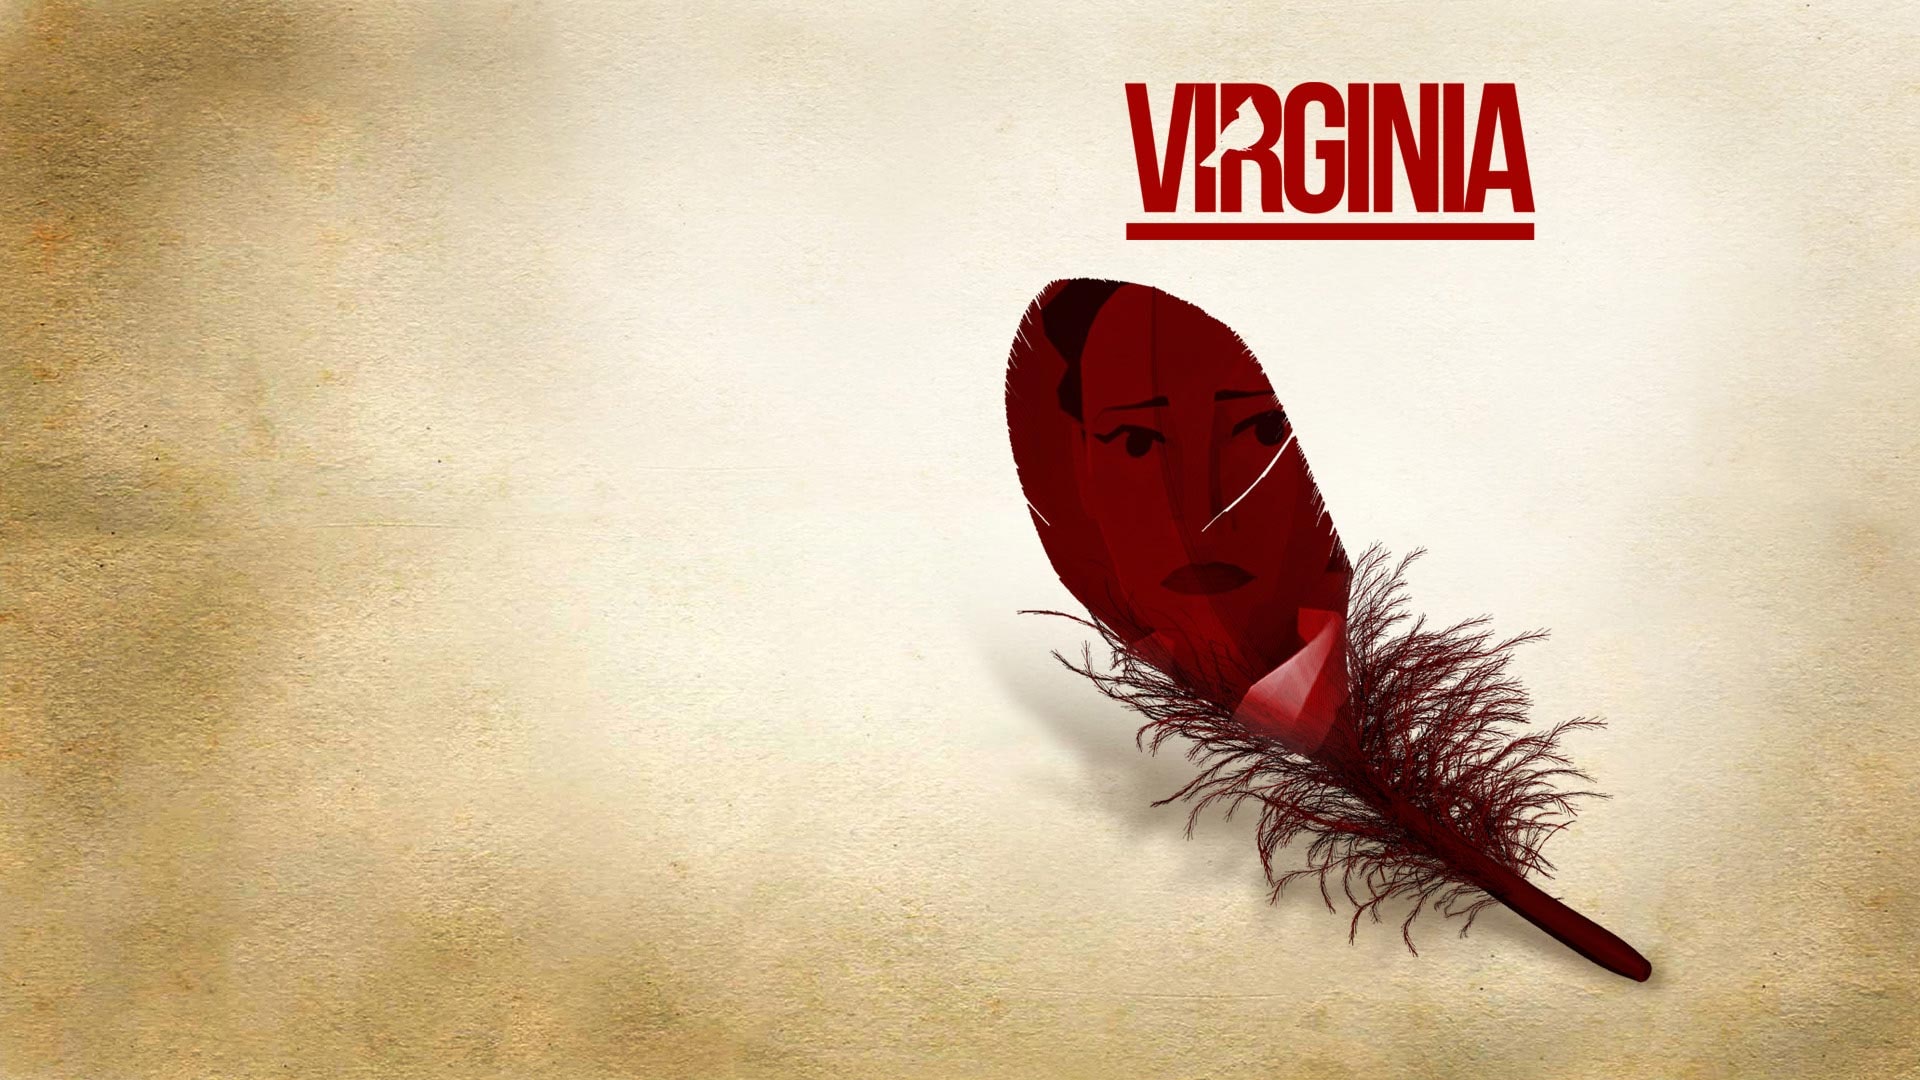 Virginia - The Game.